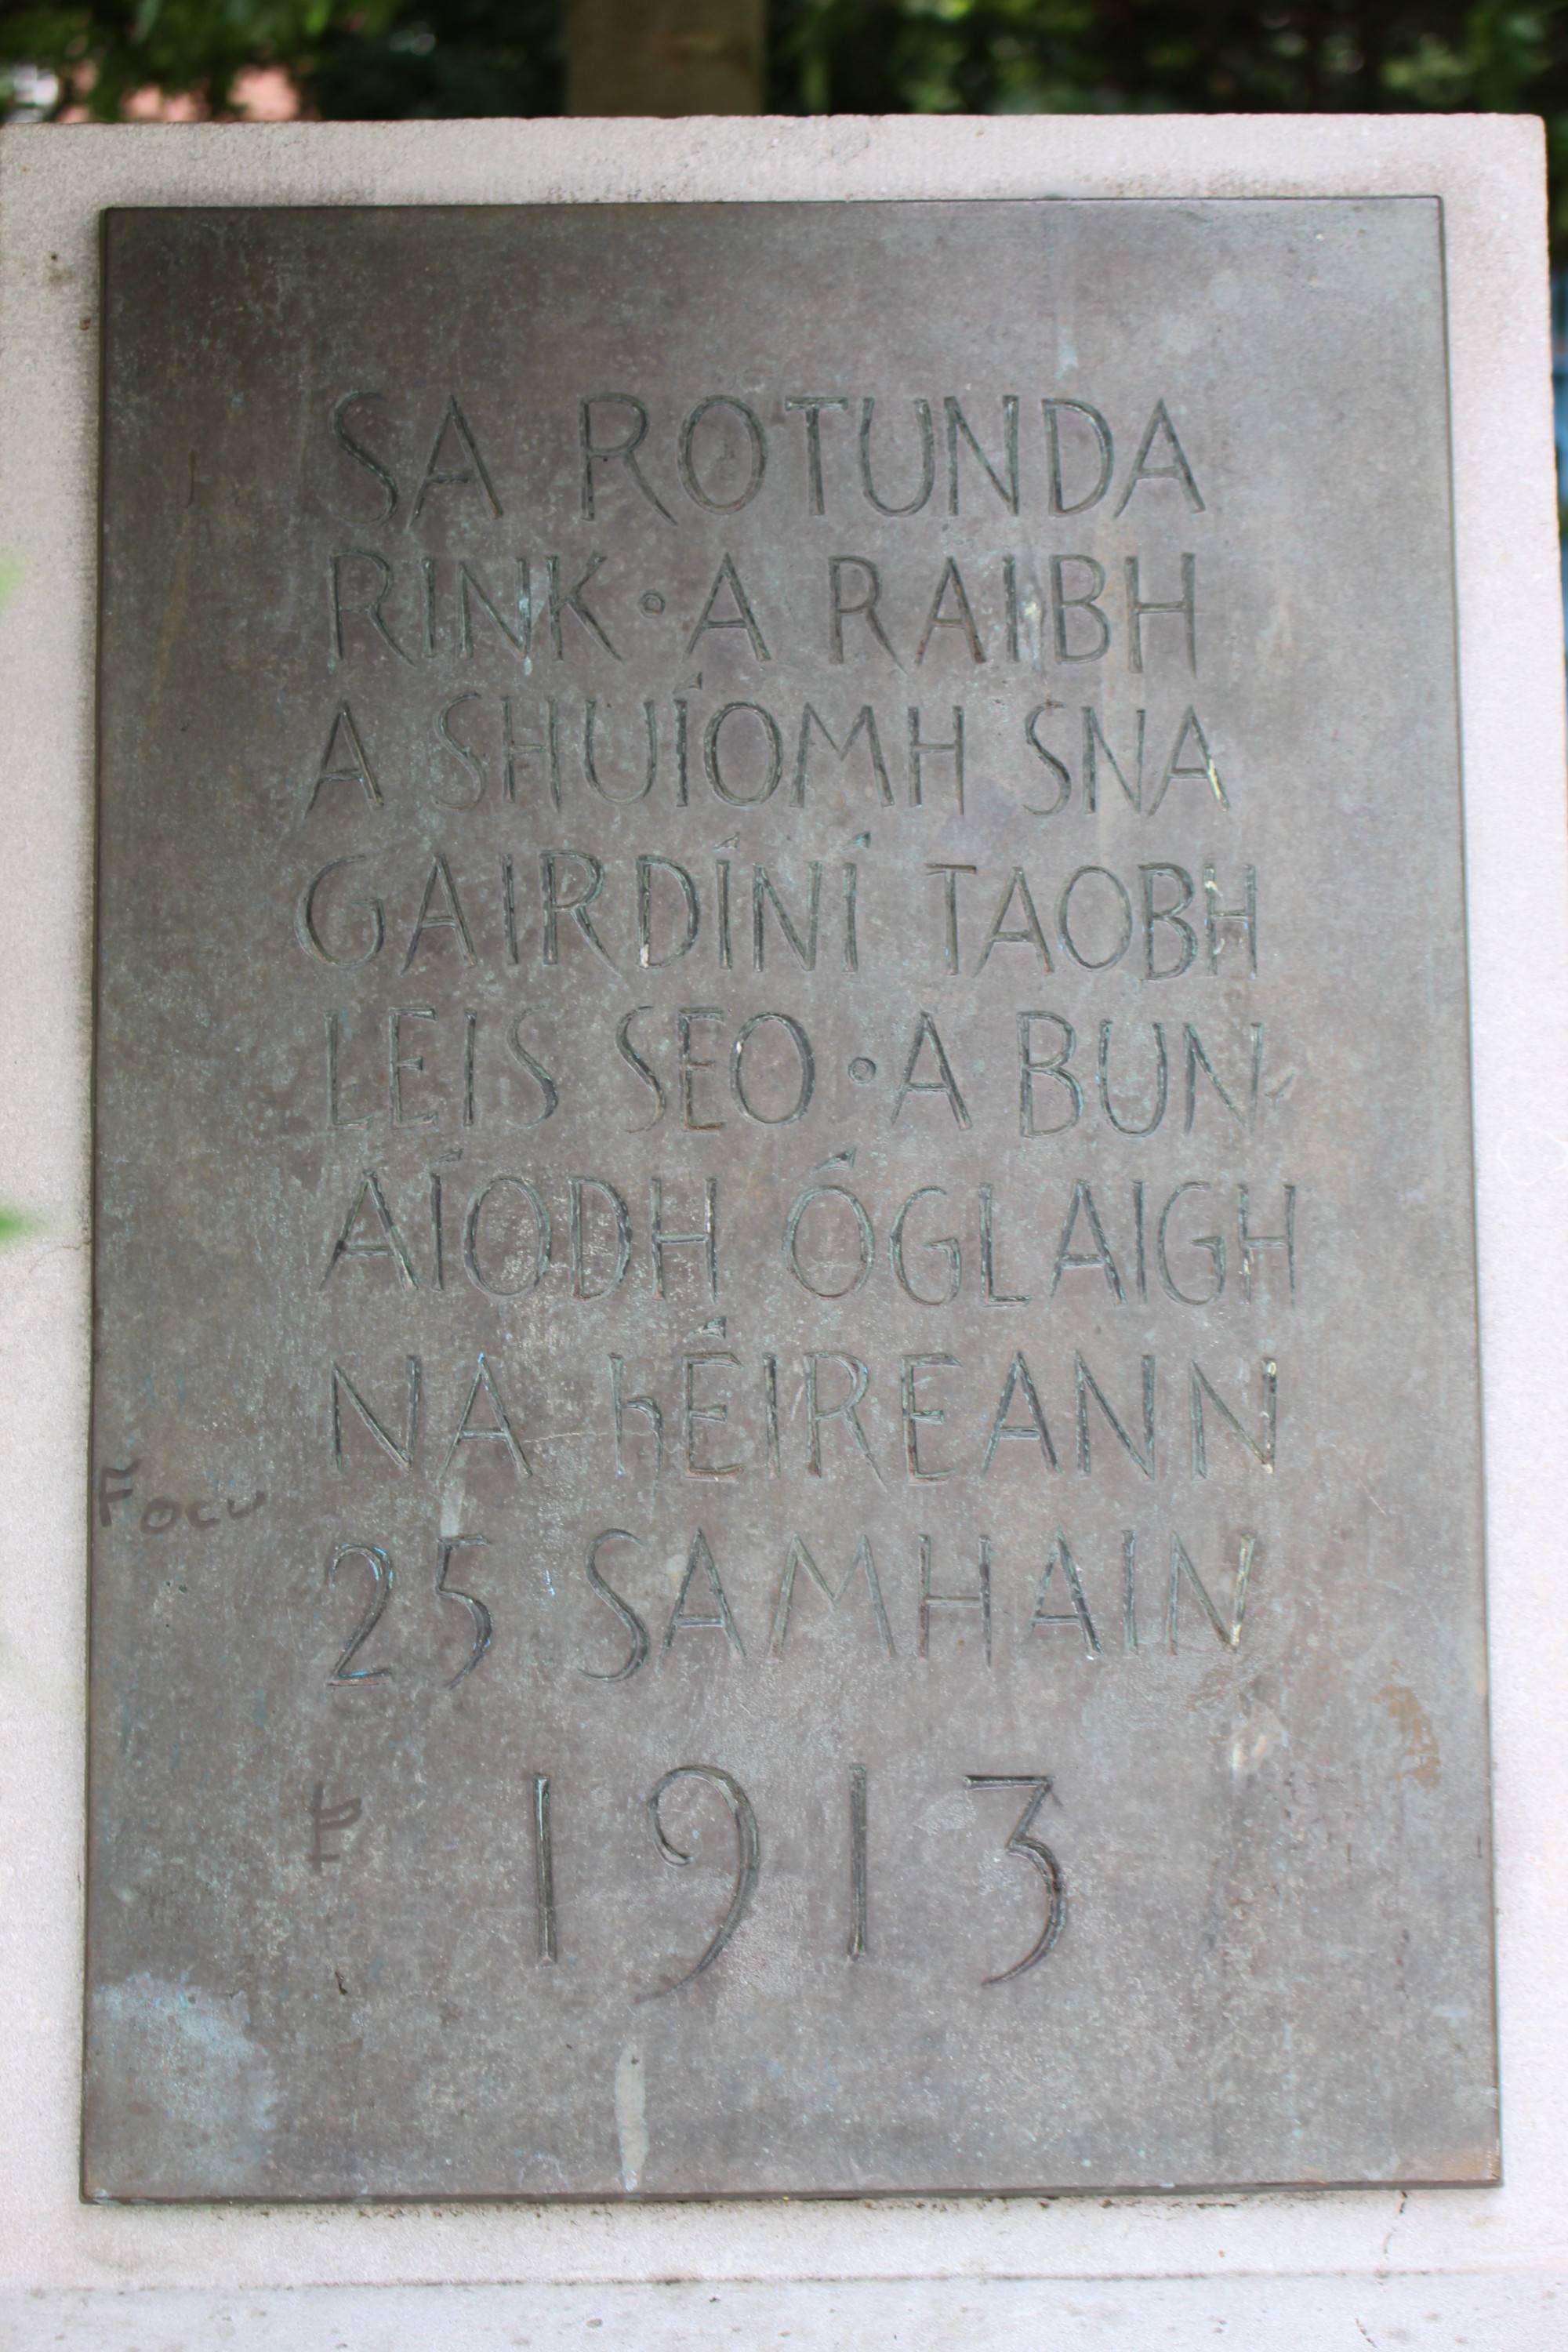 Monument celebrating the 1913 foundation of the Irish Volunteers at Rotunda Rink. OPW.